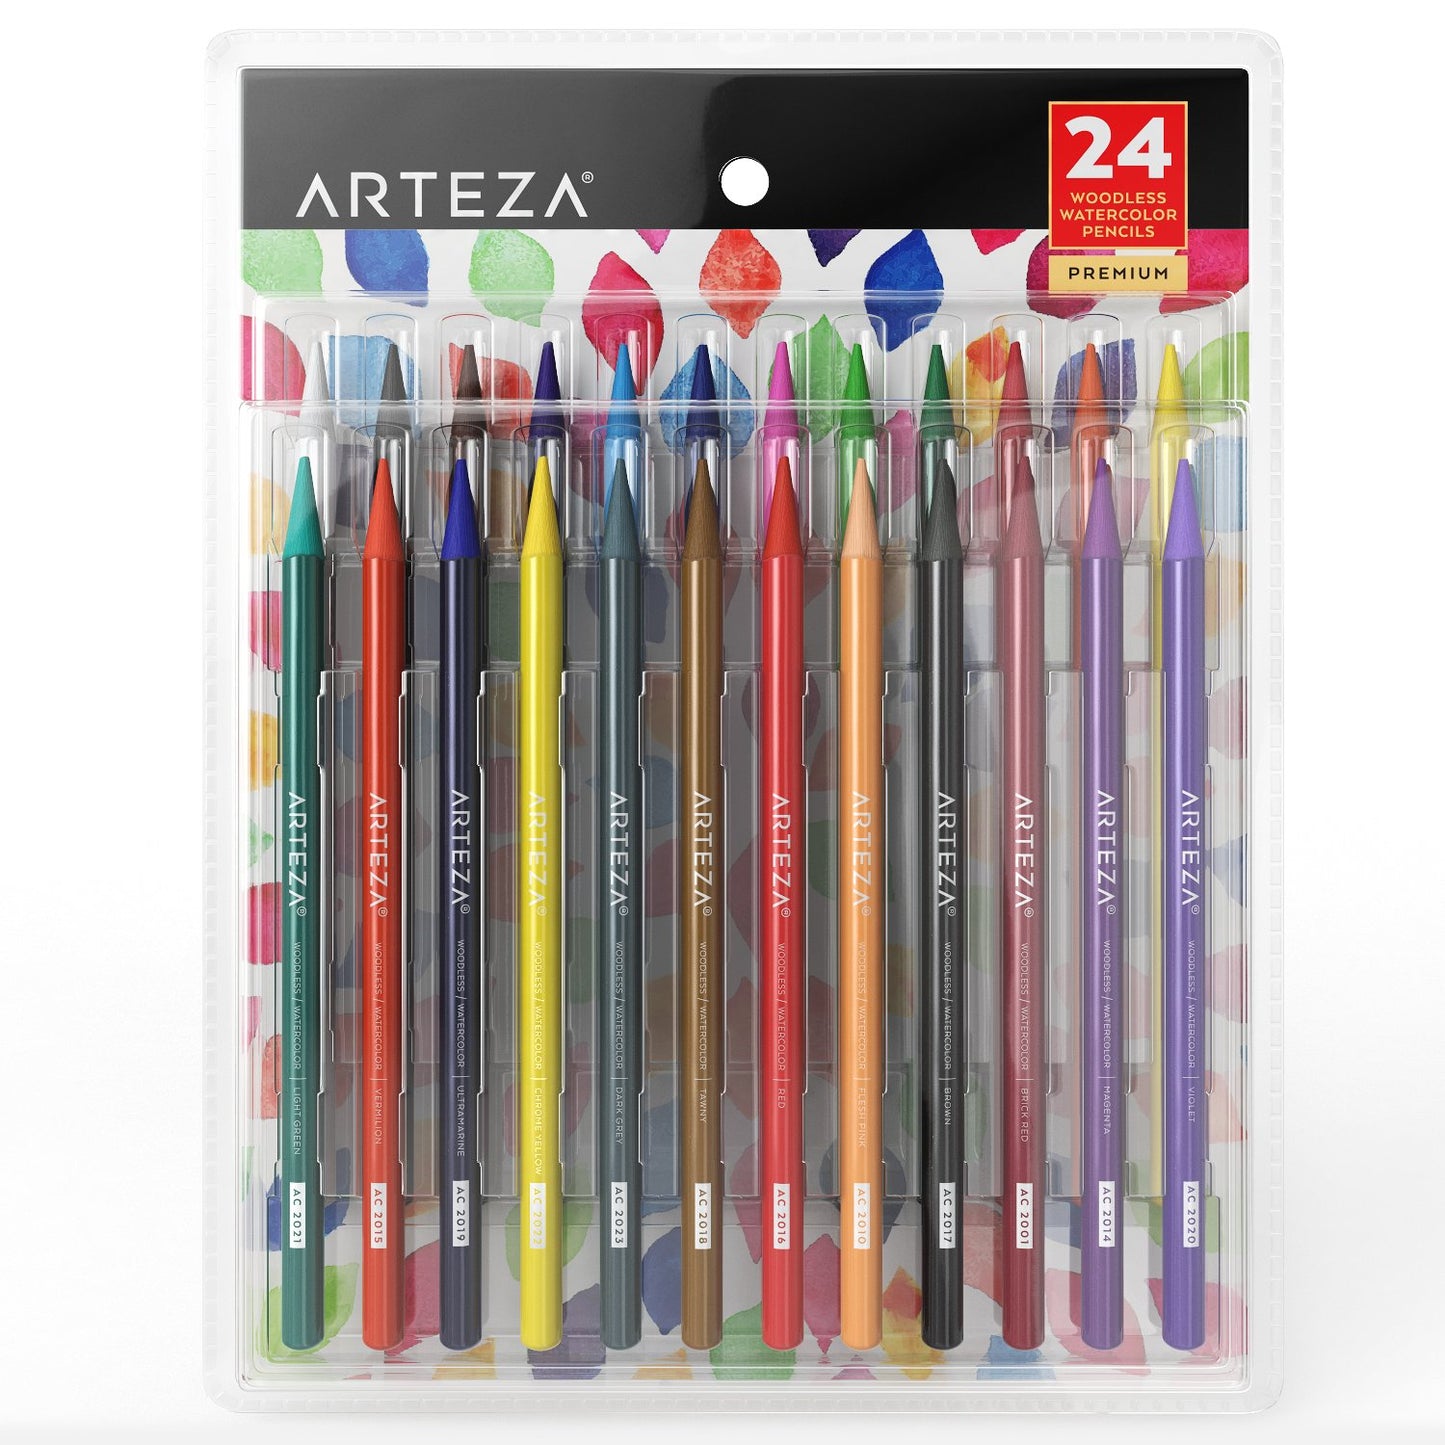 Arteza Woodless Watercolor Pencils - Set of 24